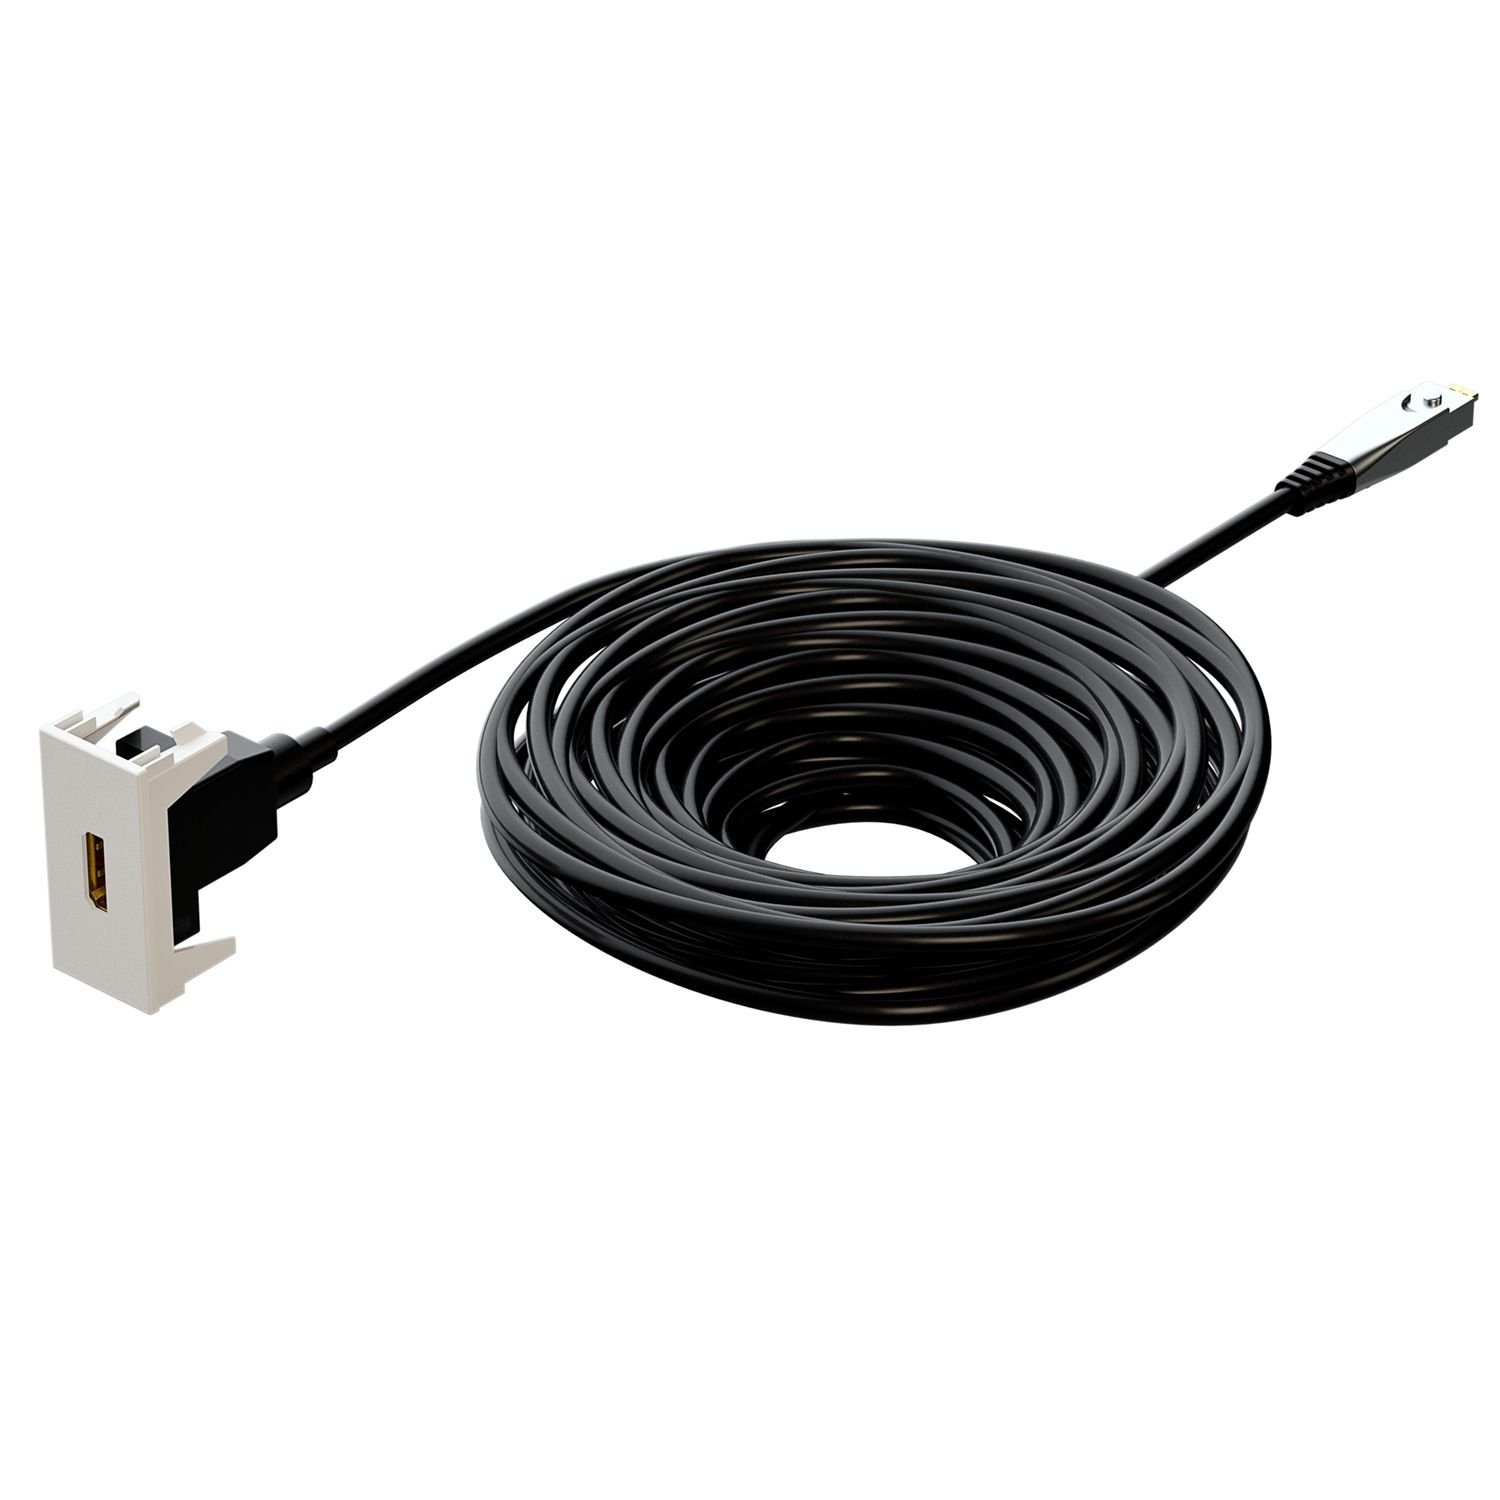 Kindermann Konnect flex 45 click HDMI AOC cable 5 m cable length - Fibre optic cable with Ethernet - Half screen - White